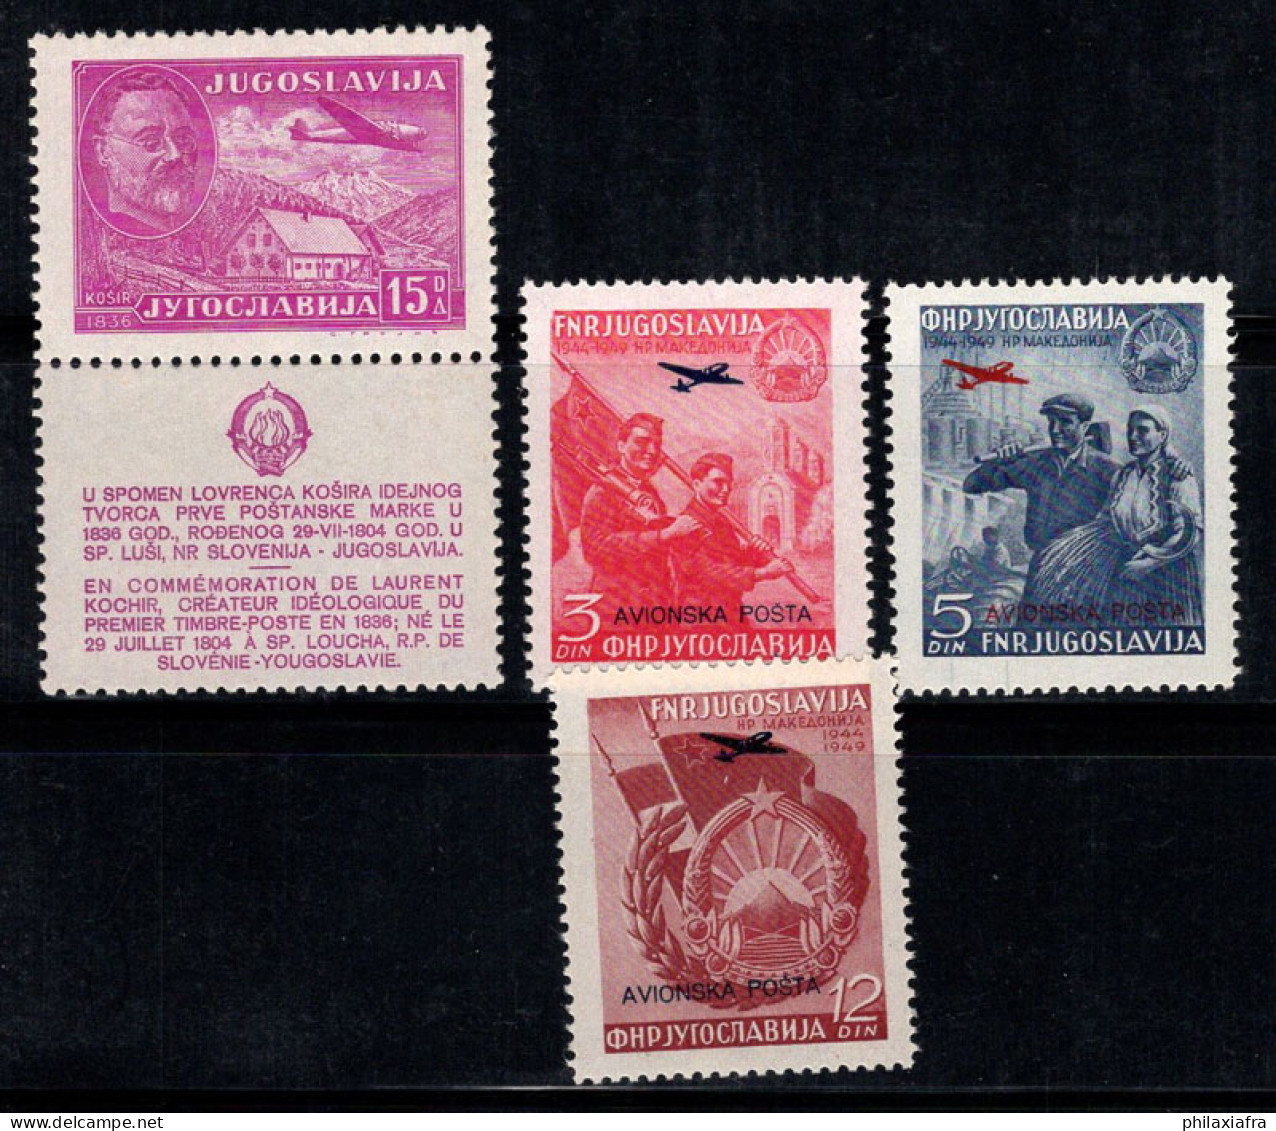 Yougoslavie 1948 Mi. 556, 575-577 Neuf ** 100% Poste Aérienne Kosir, AVIONSKA - Poste Aérienne